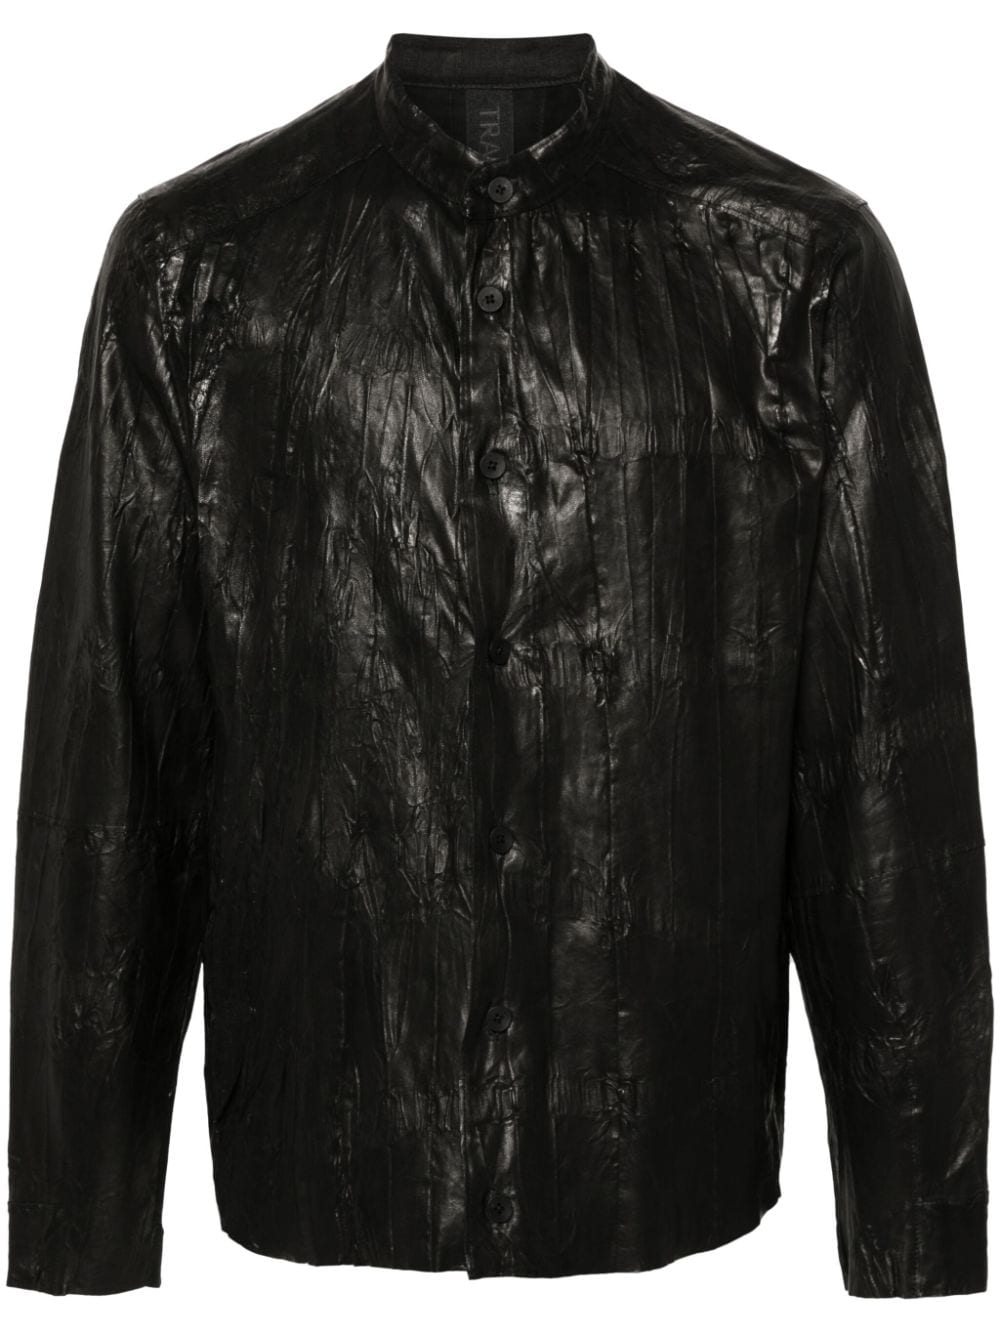 Transit Crinkled Leather Shirt In Black